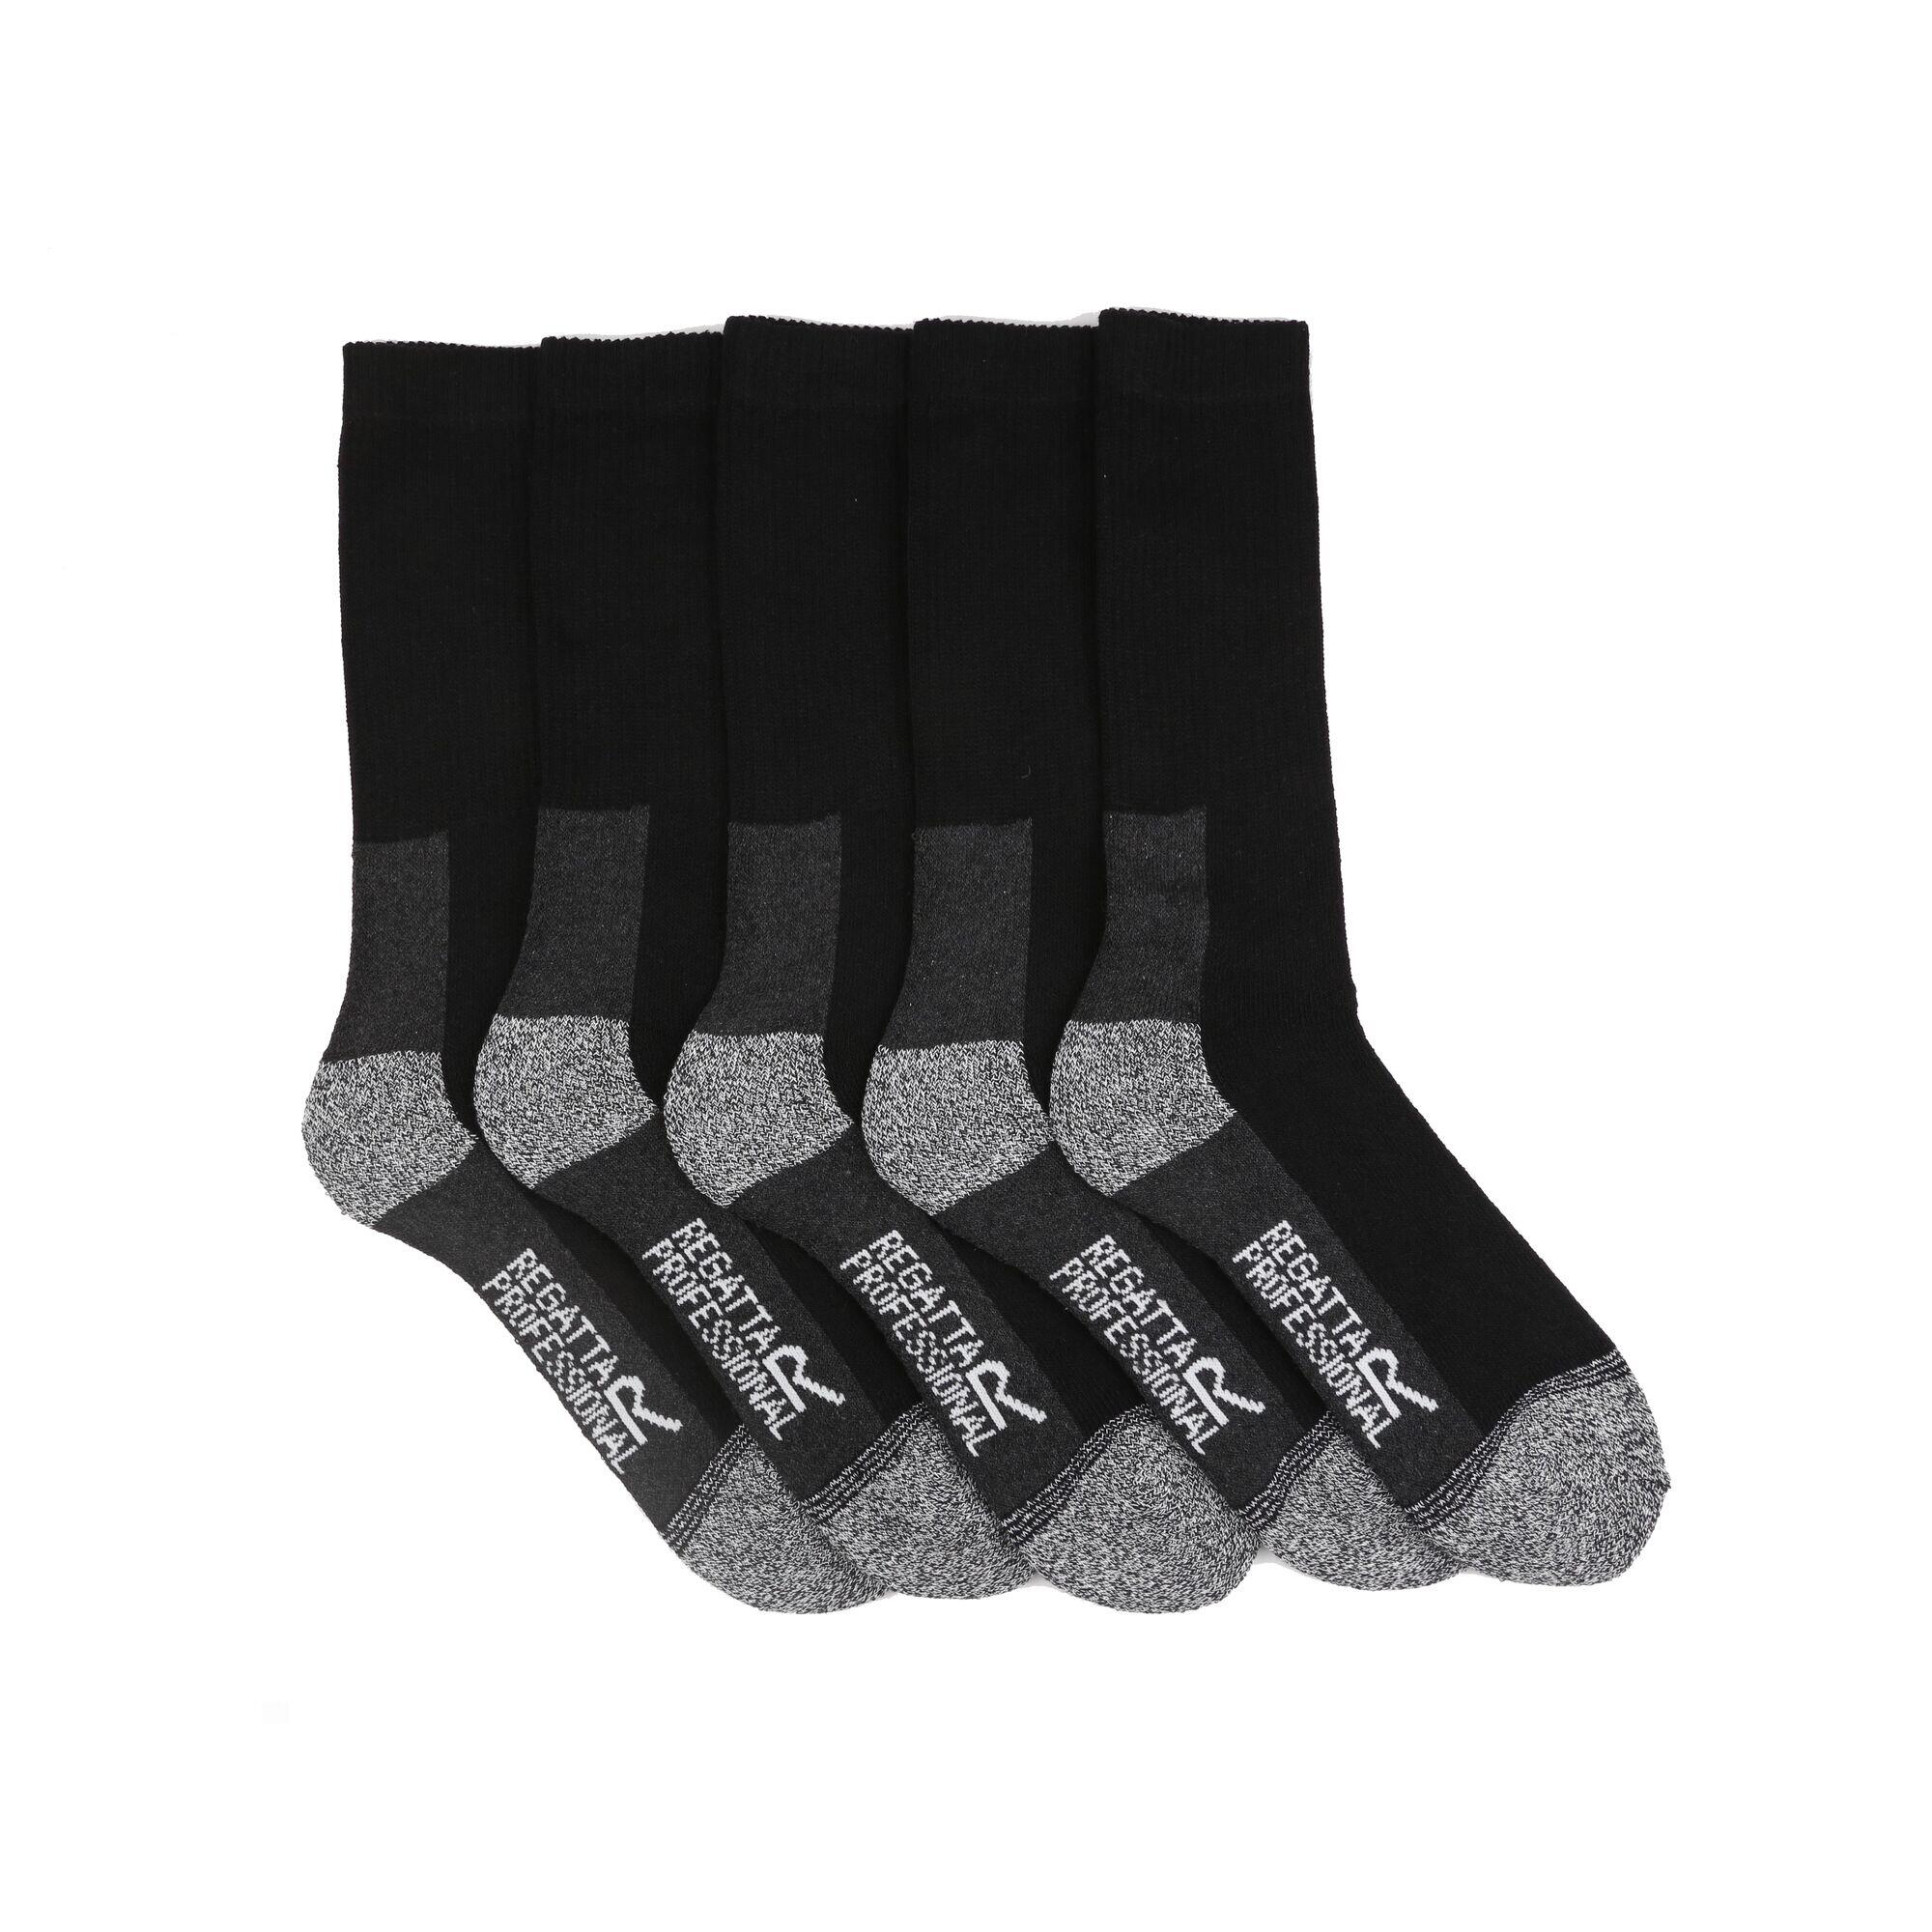 REGATTA Mens Boot Socks (Pack of 5) (Black)